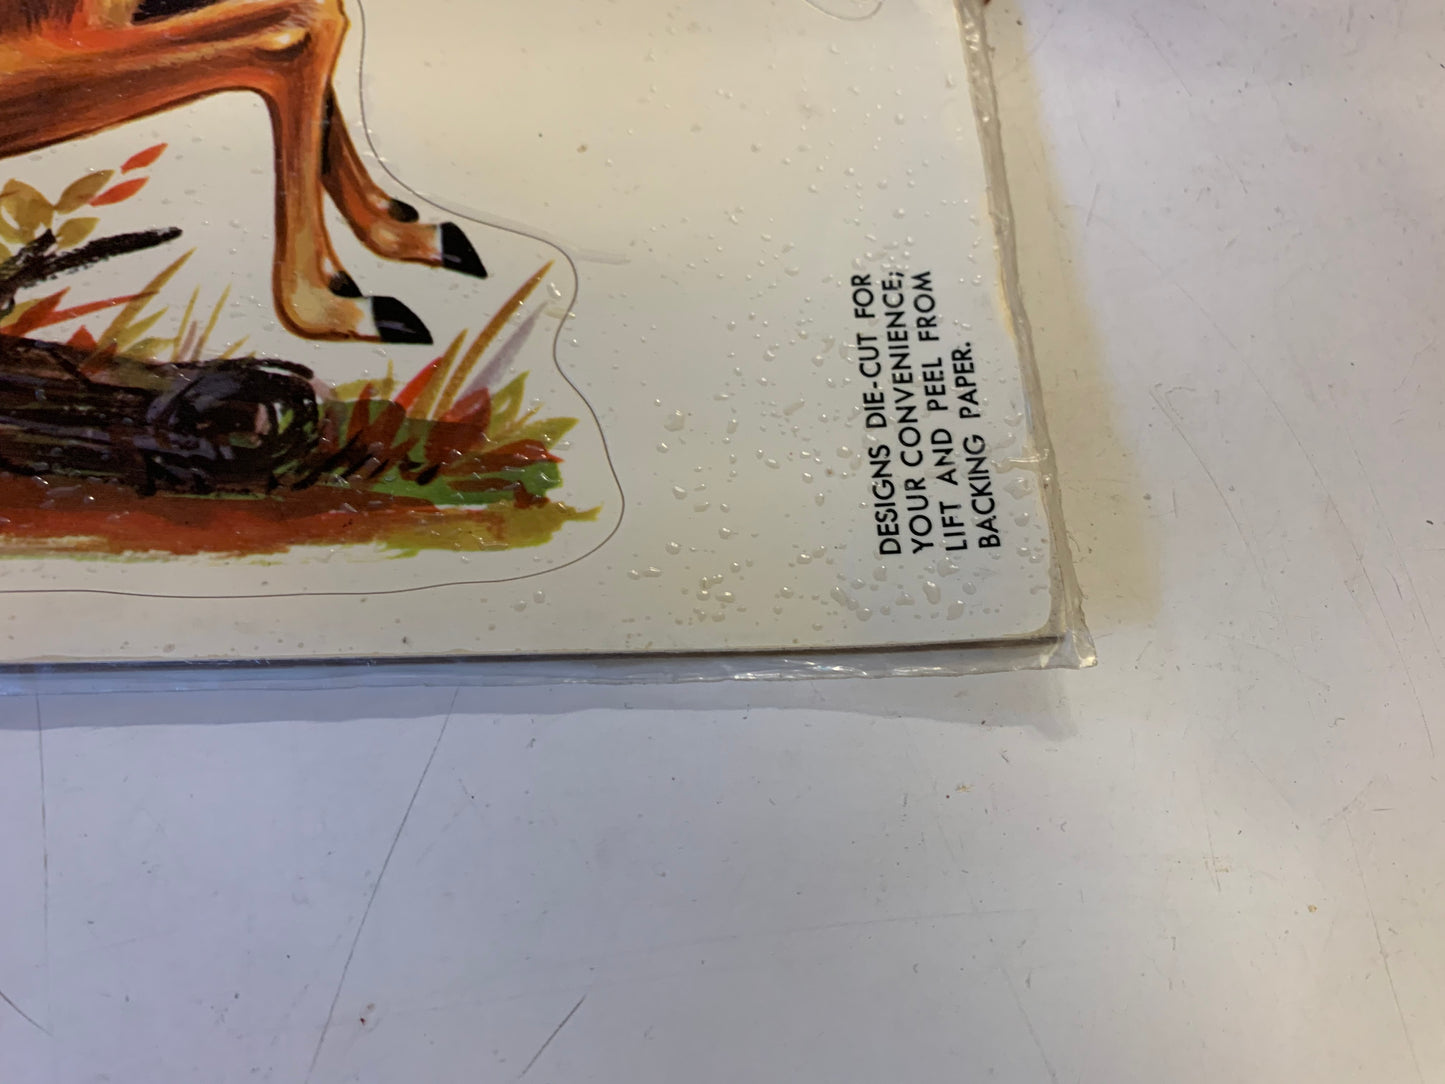 Vintage Deer Sport - Stik Meyercord Vinyl Stickers Decals Buck NOS